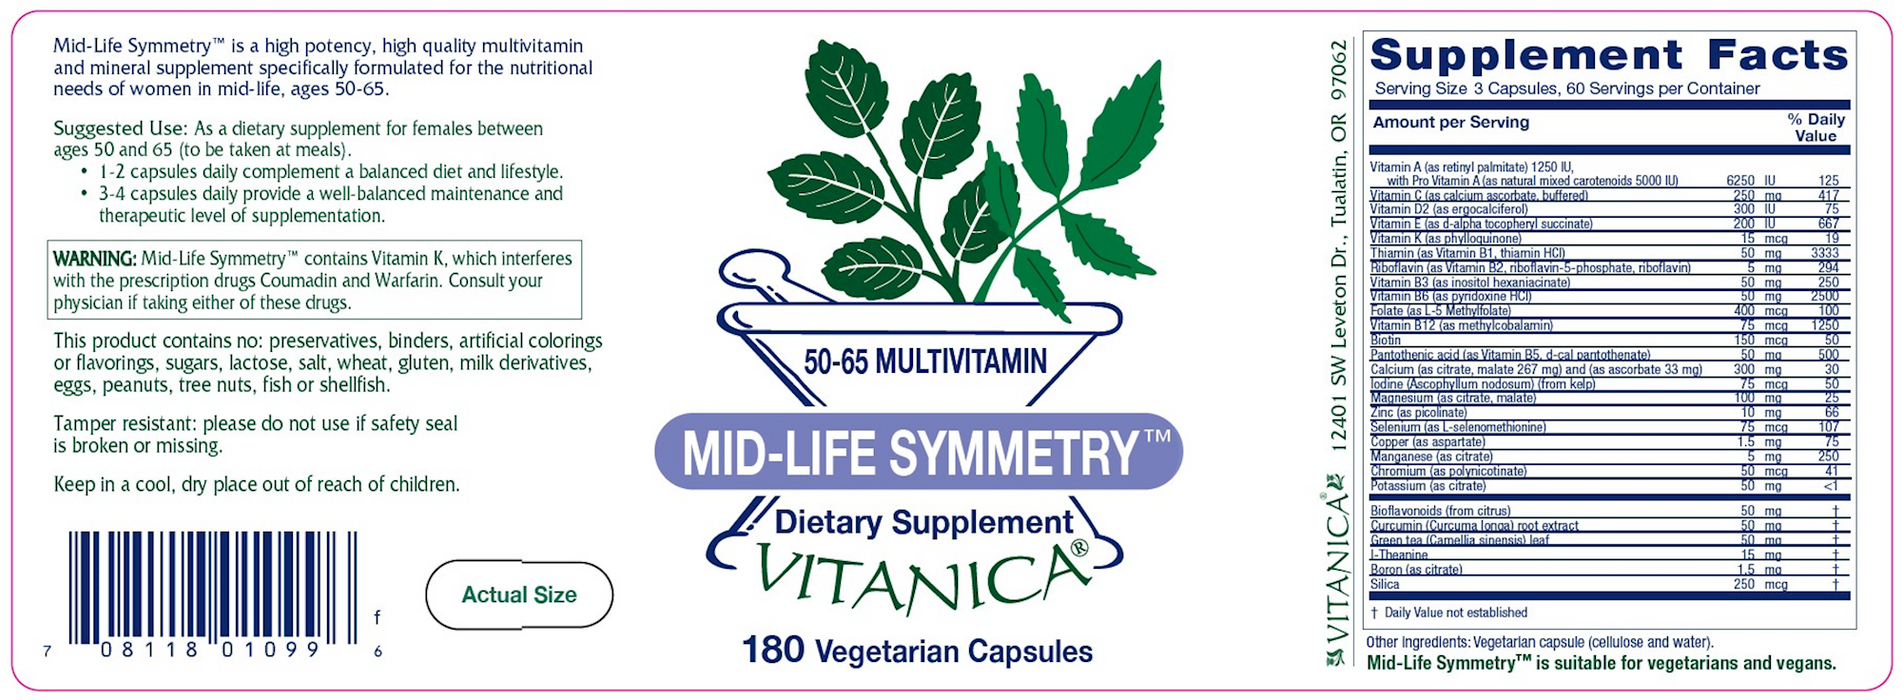 Mid-Life Symmetry